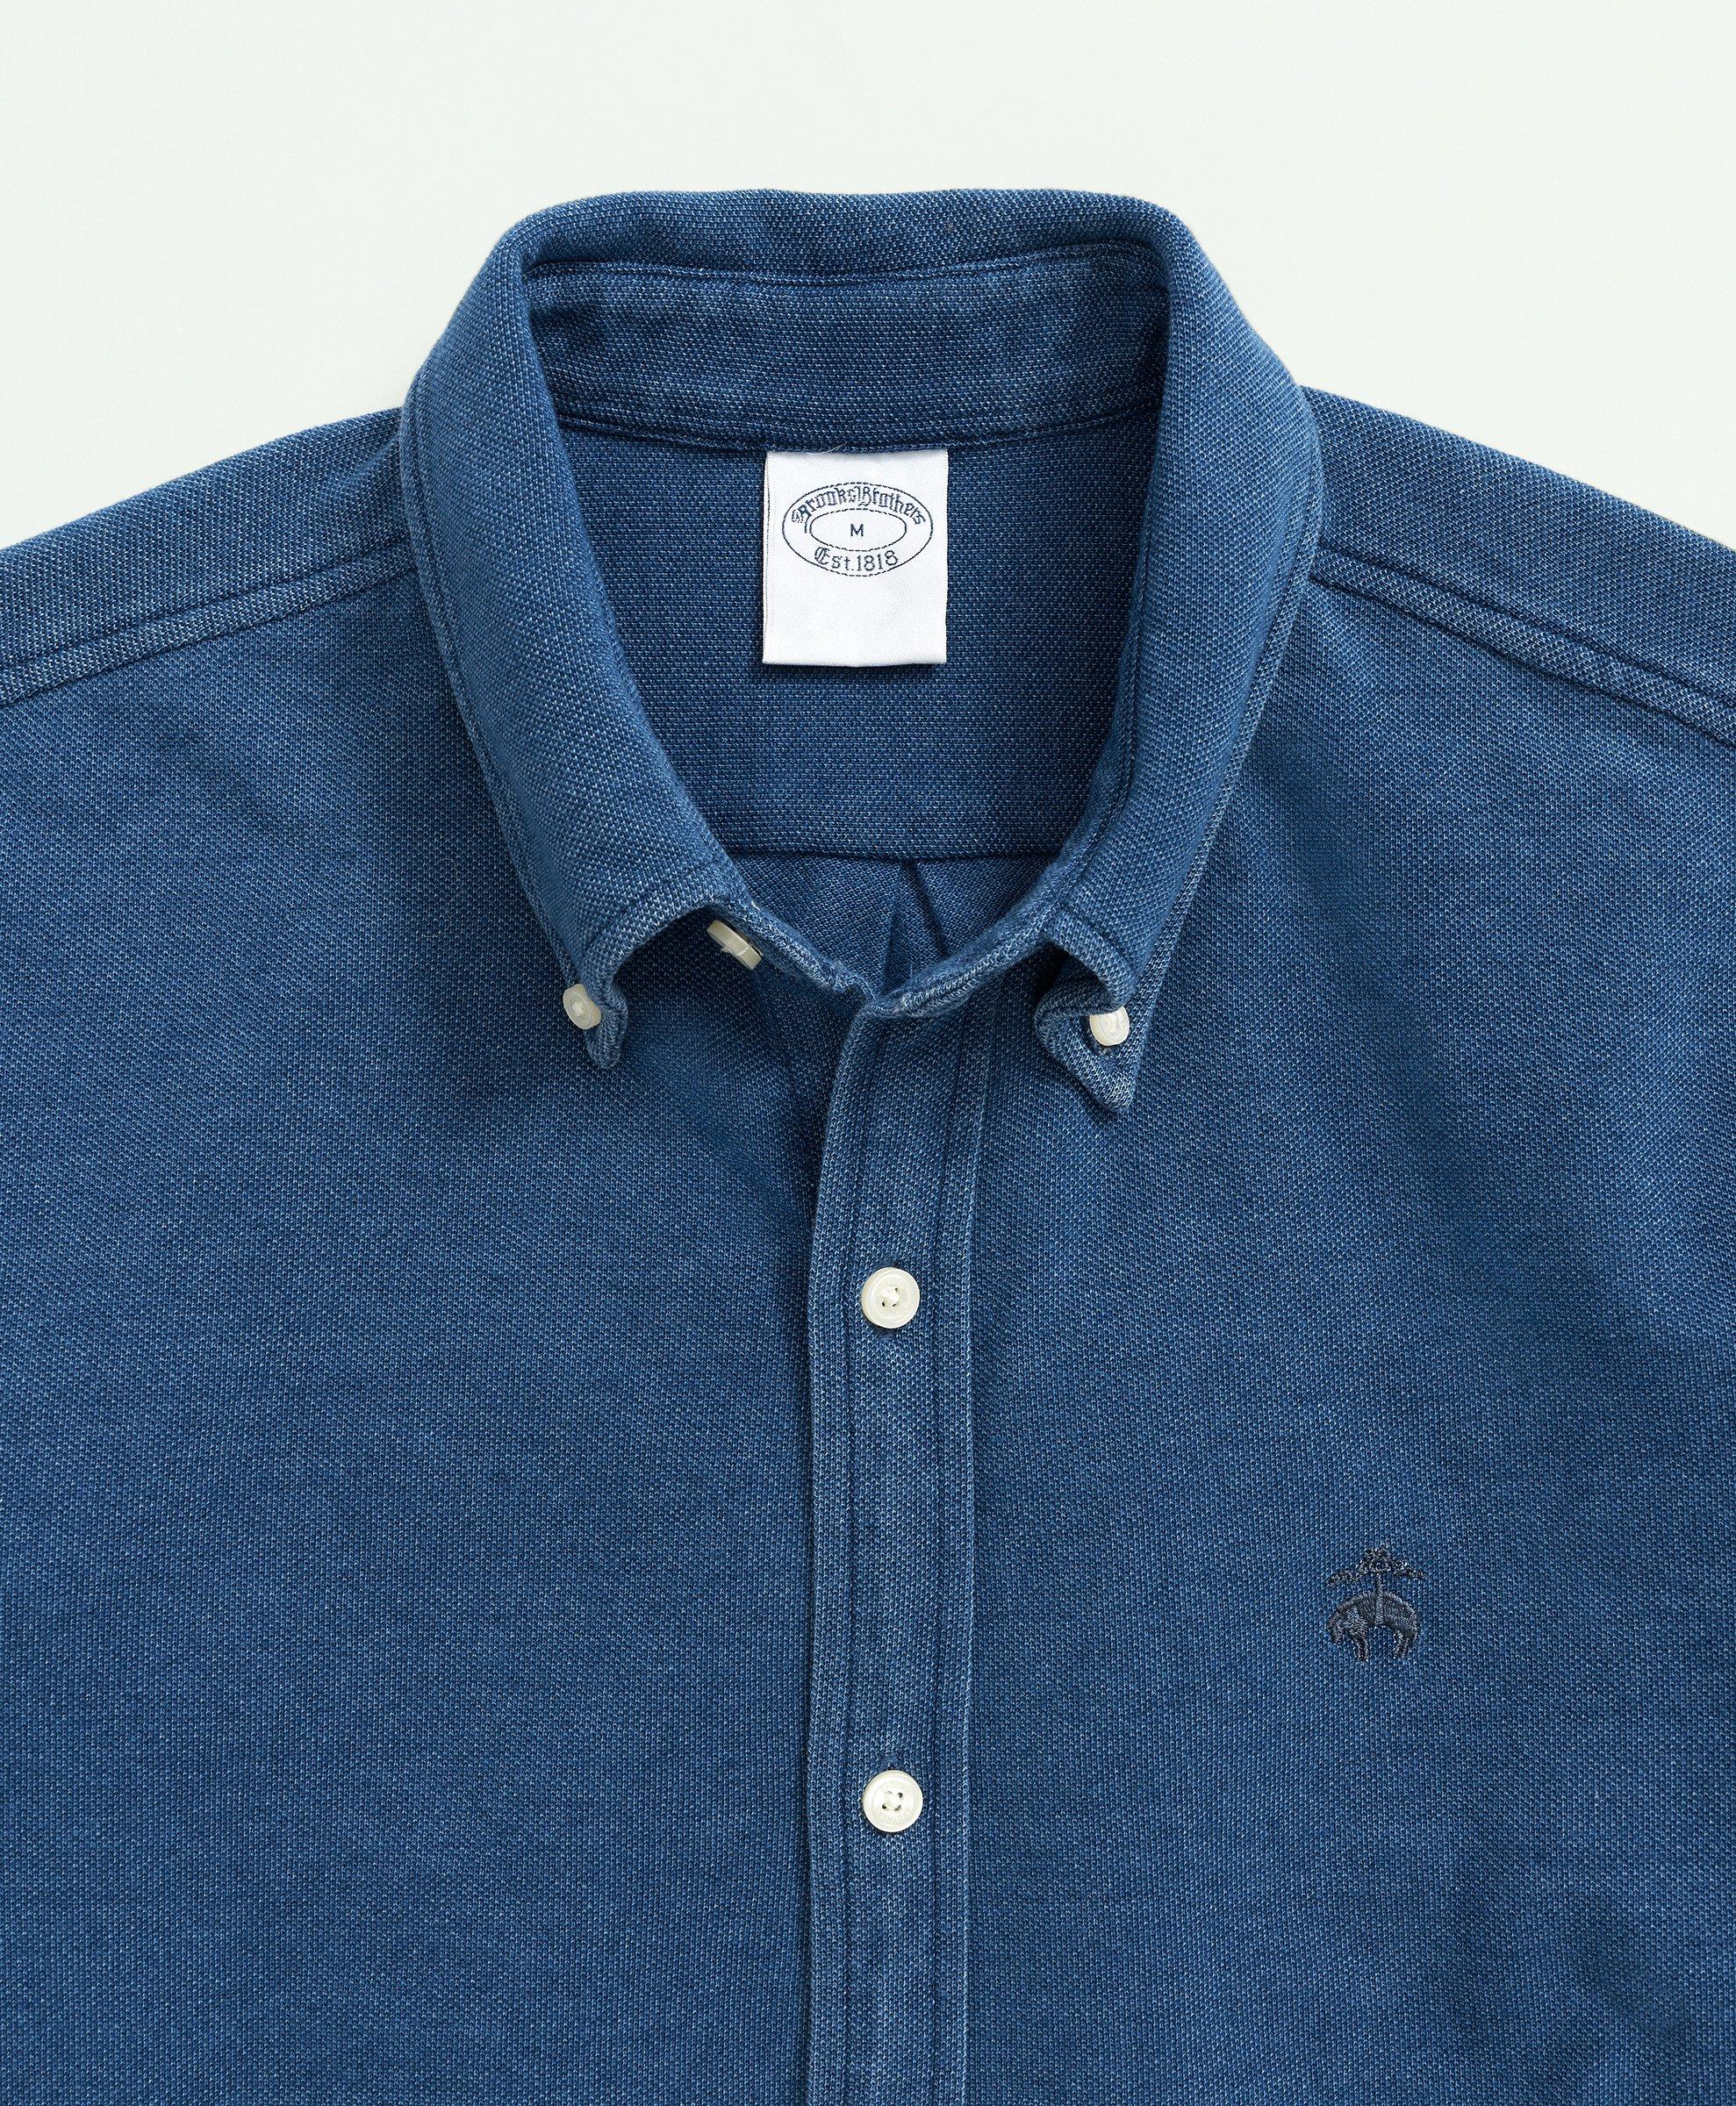 Washed Cotton Pique Short-Sleeve Knit Shirt